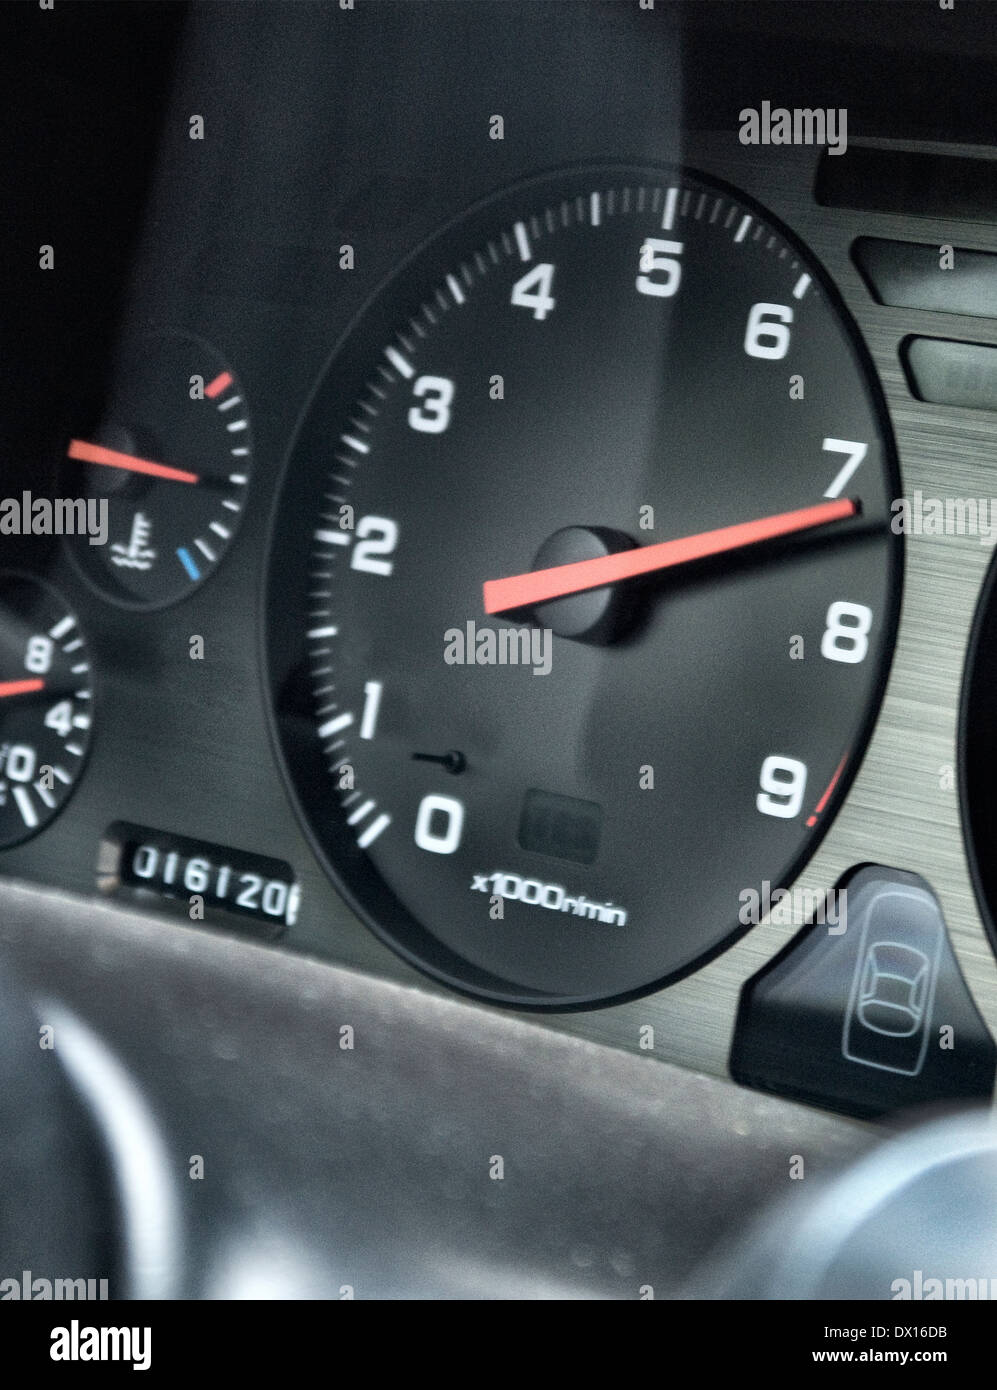 Honda NSX rev counter indication 7000 rpm. Stock Photo